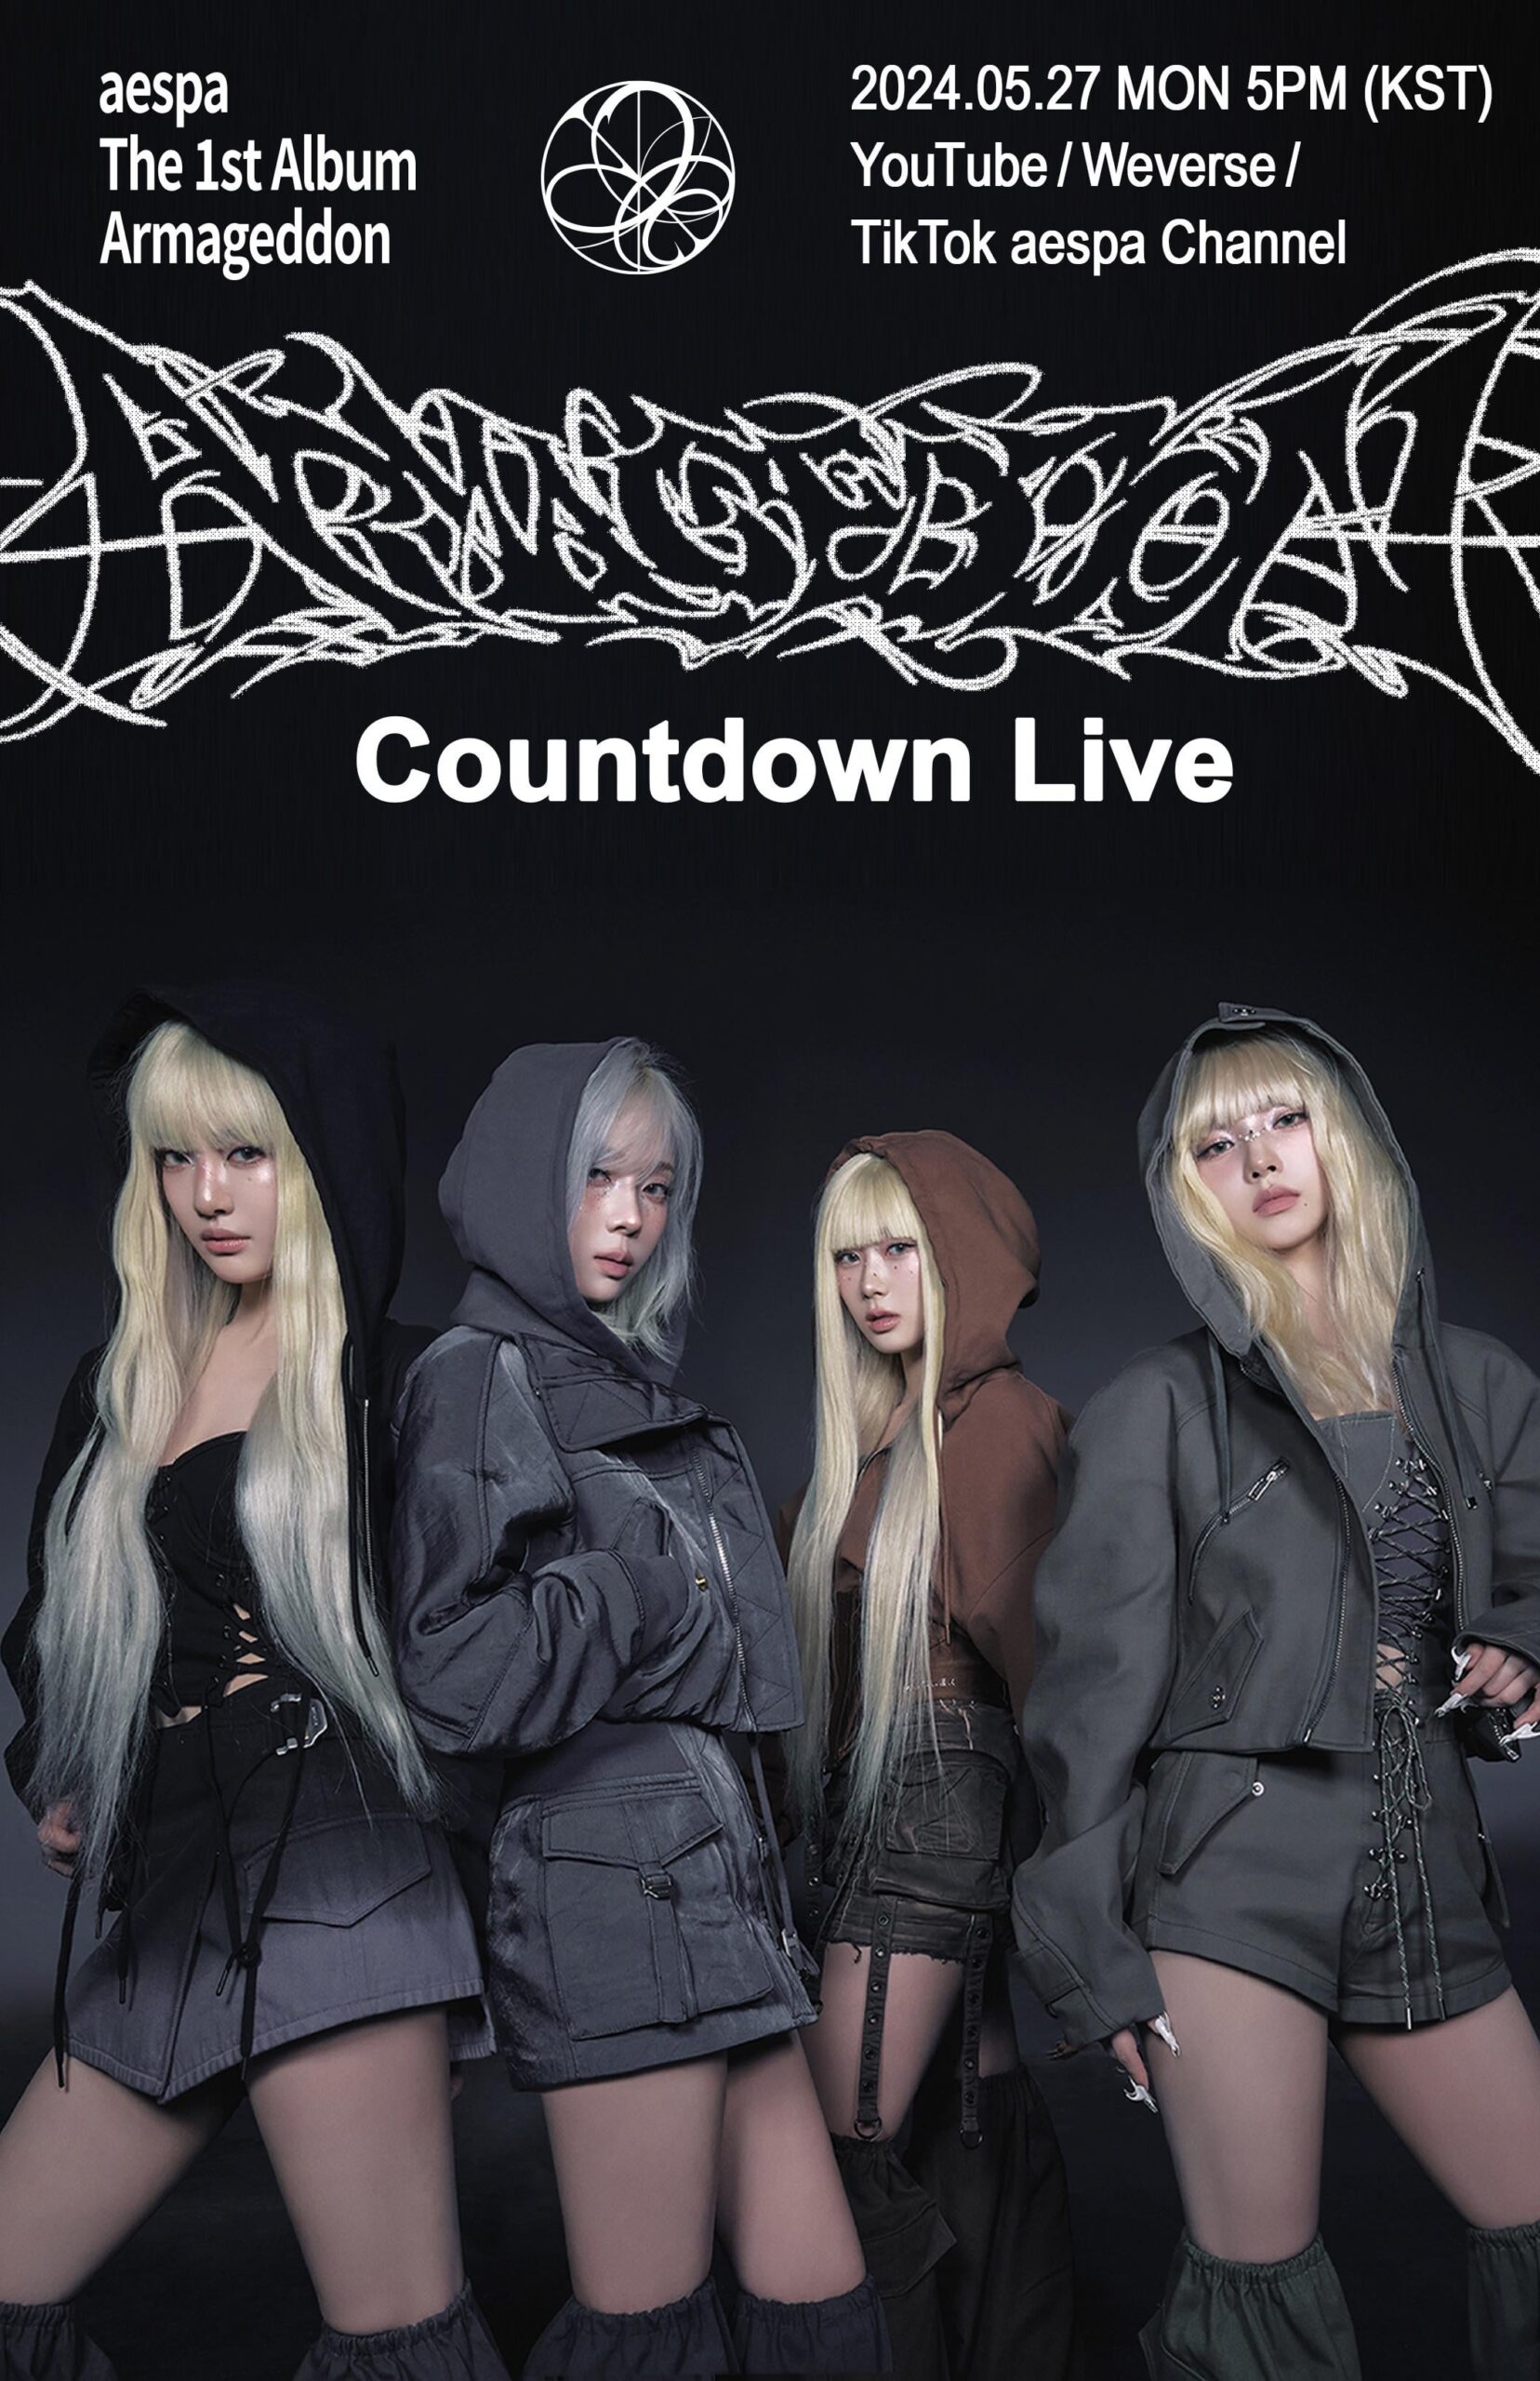 240522 aespa - The 1st Album: Armageddon (Countdown Live Teaser Poster)